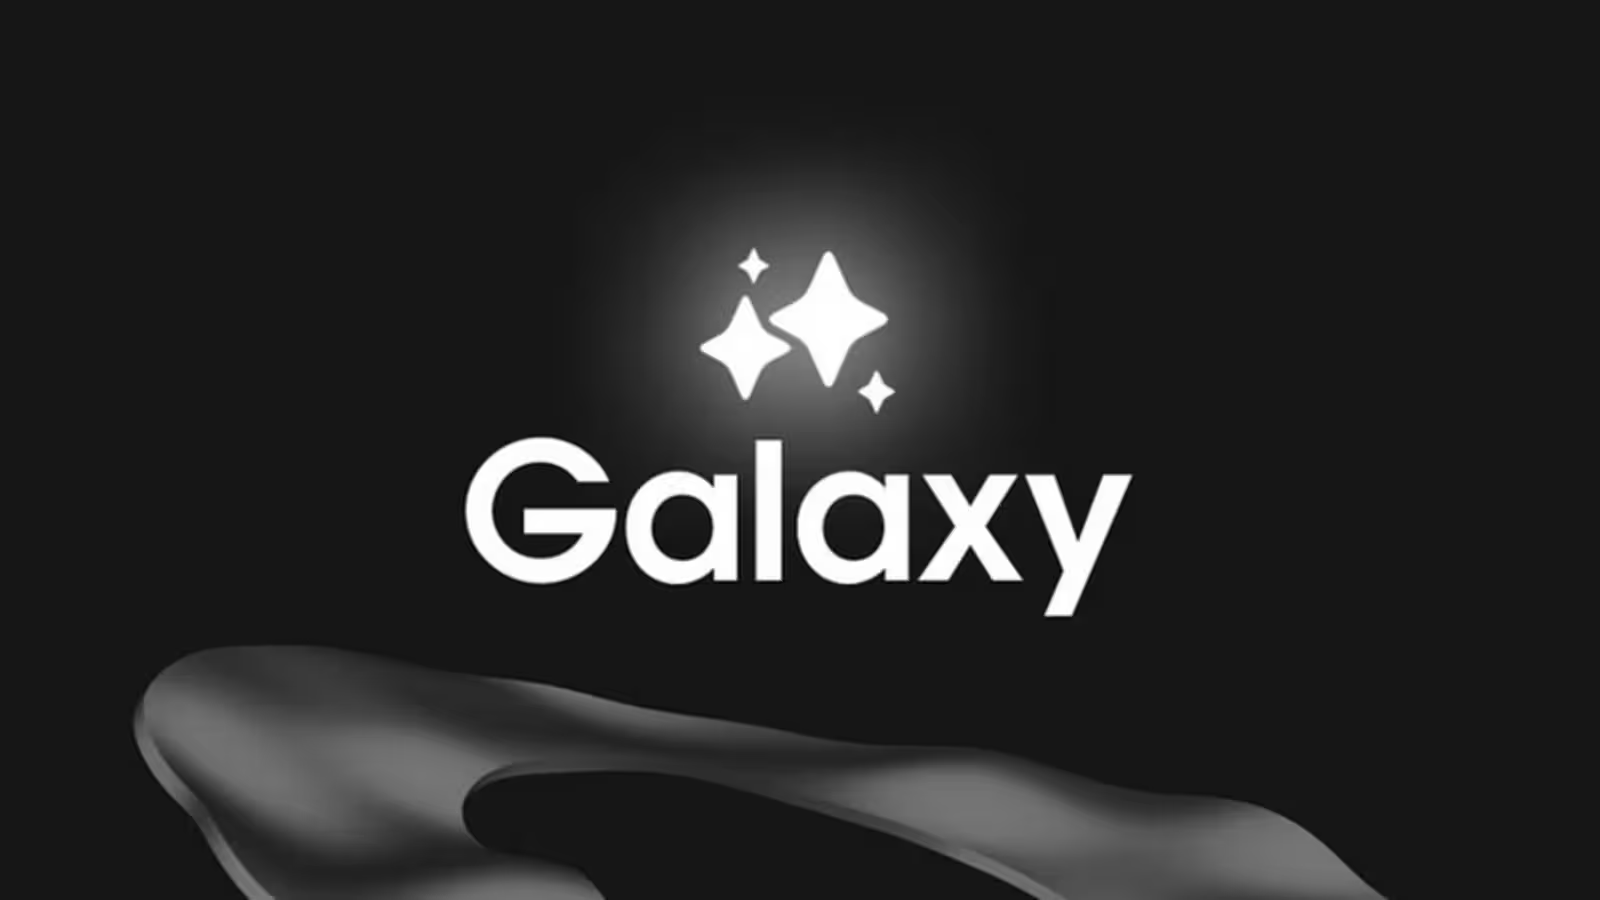 Samsung Galaxy AI'ı Ne Zaman Tanıtacak?